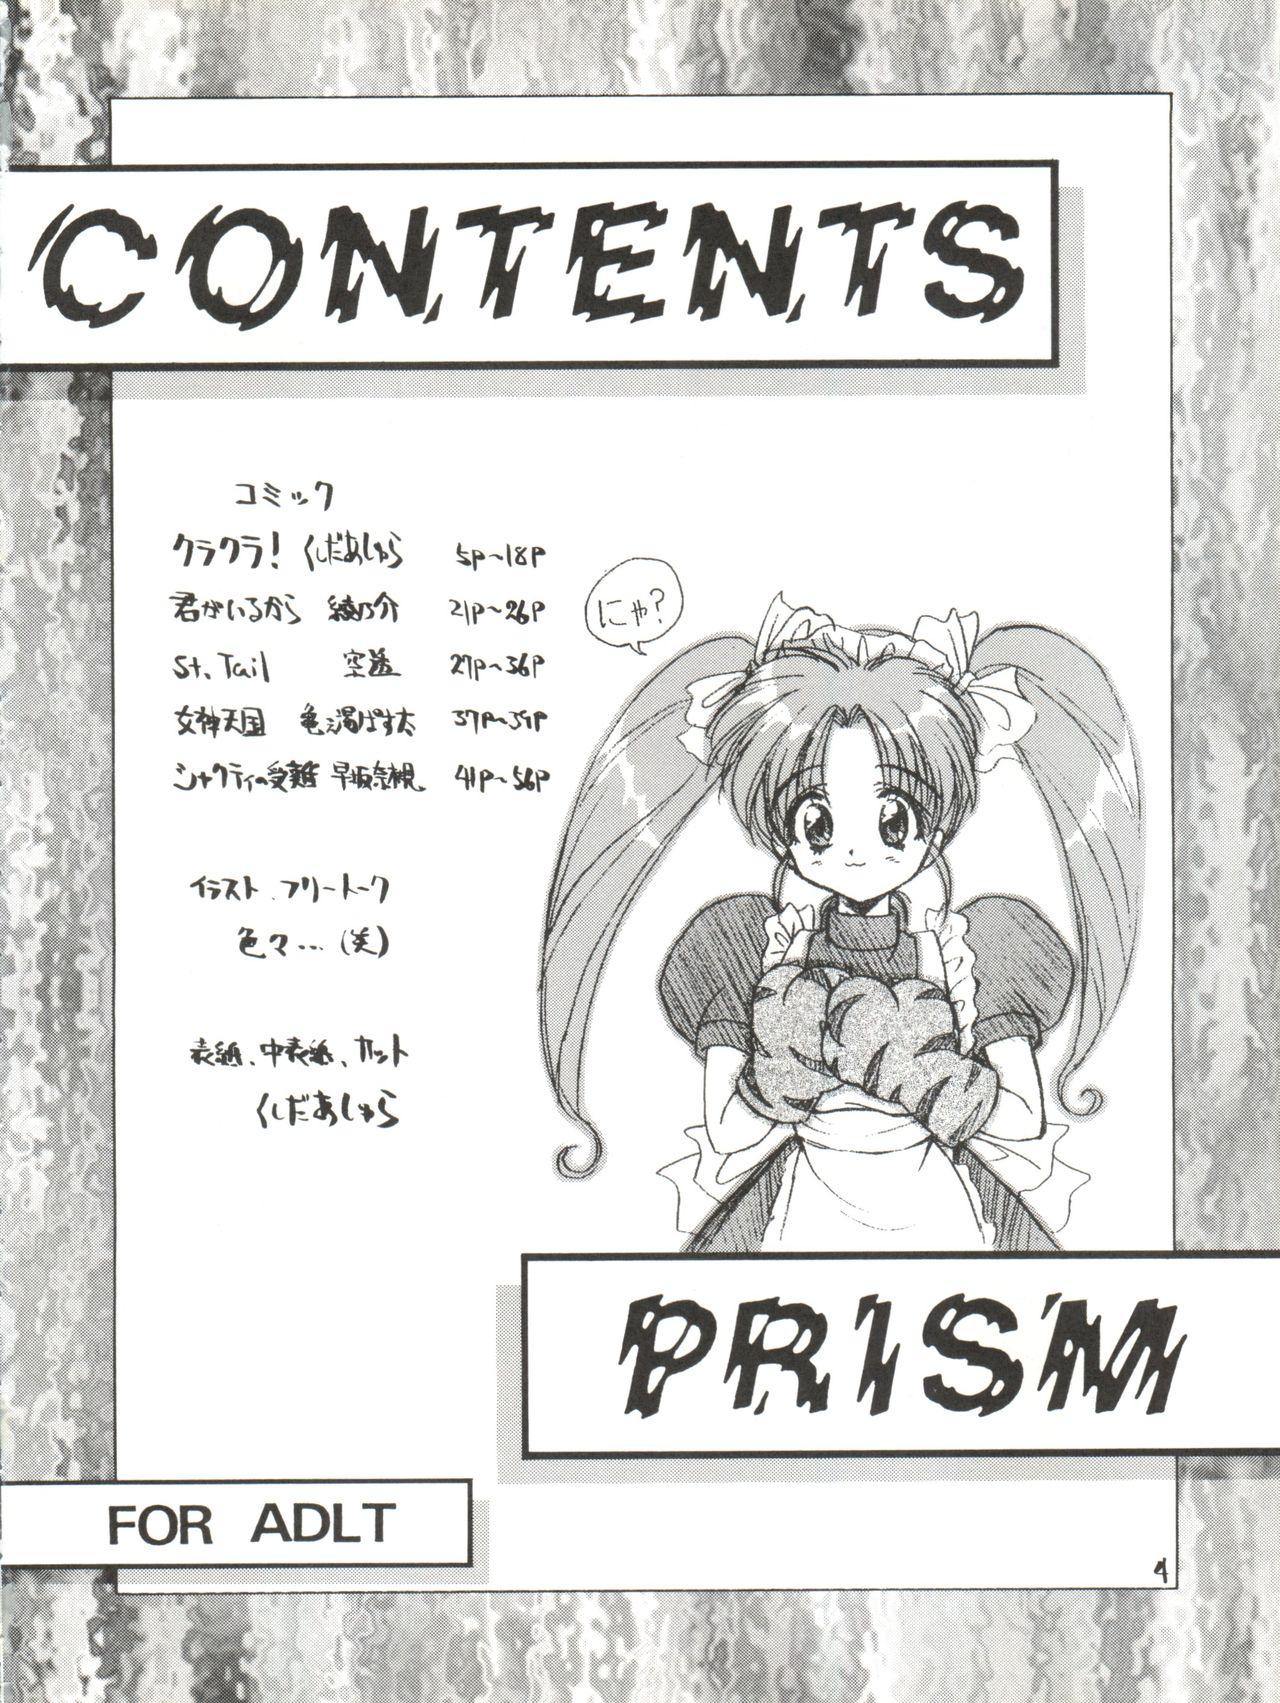 Shaven PRISM - Tokimeki memorial Saint tail Wedding peach Victory gundam Megami paradise Little - Page 4